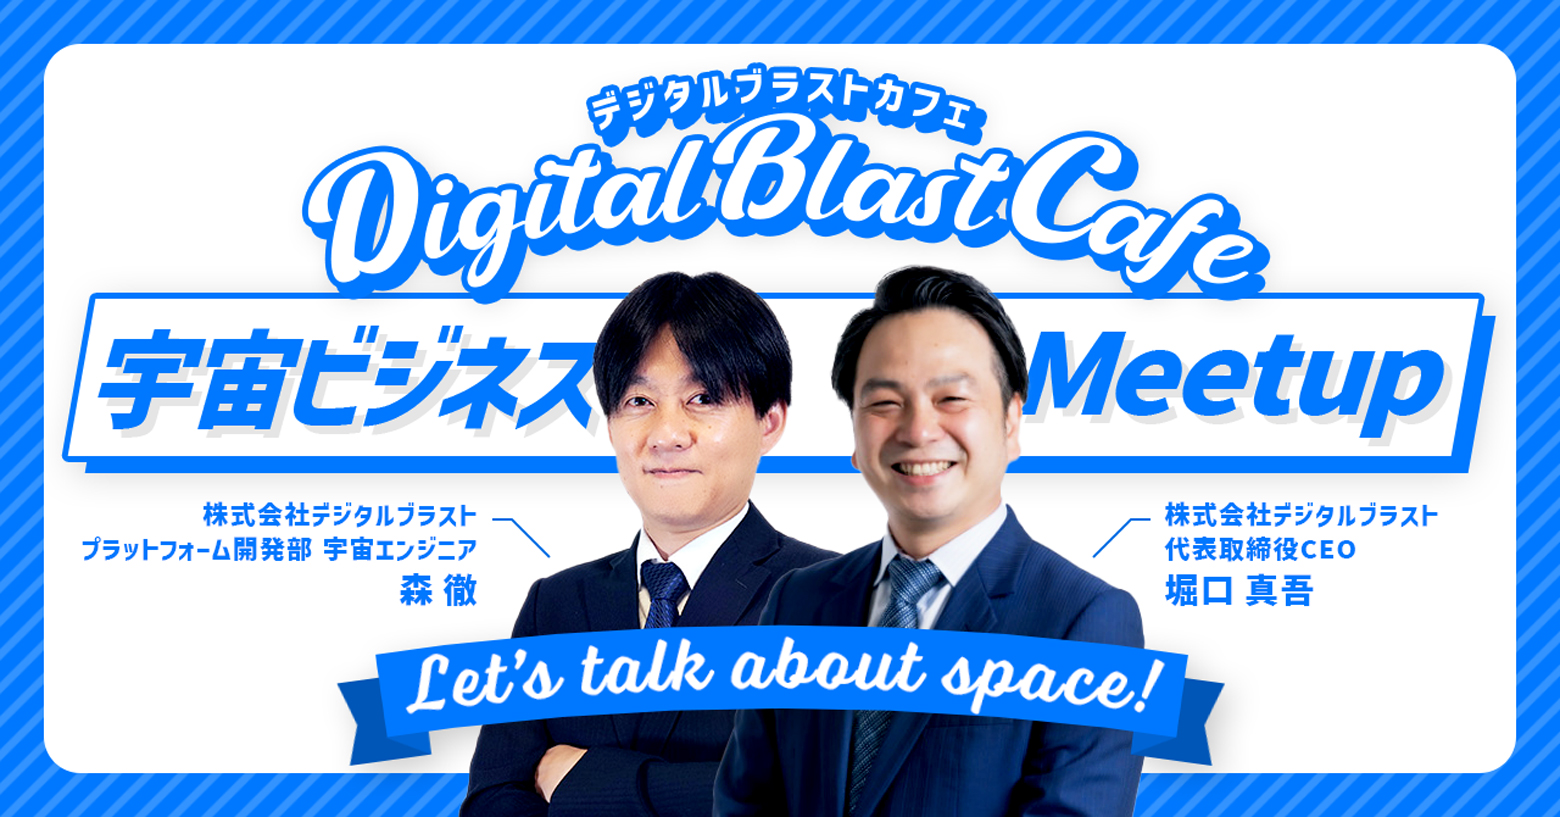 「DigitalBlast Cafe～宇宙ビジネスMeetup～」開催のお知らせ